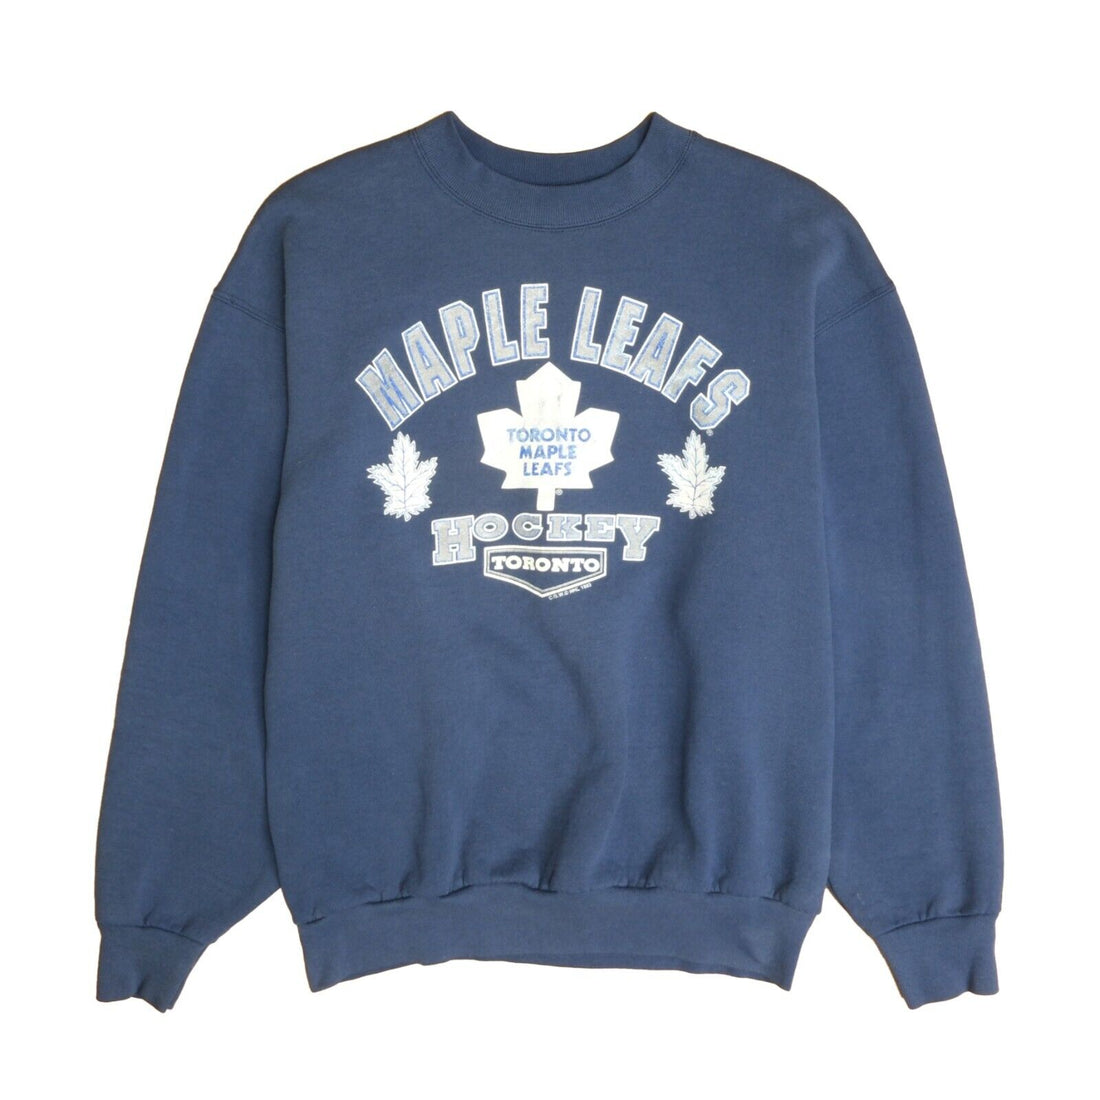 Vintage Toronto Maple Leafs Sweatshirt Crewneck Size XL Blue 1993 90s NHL